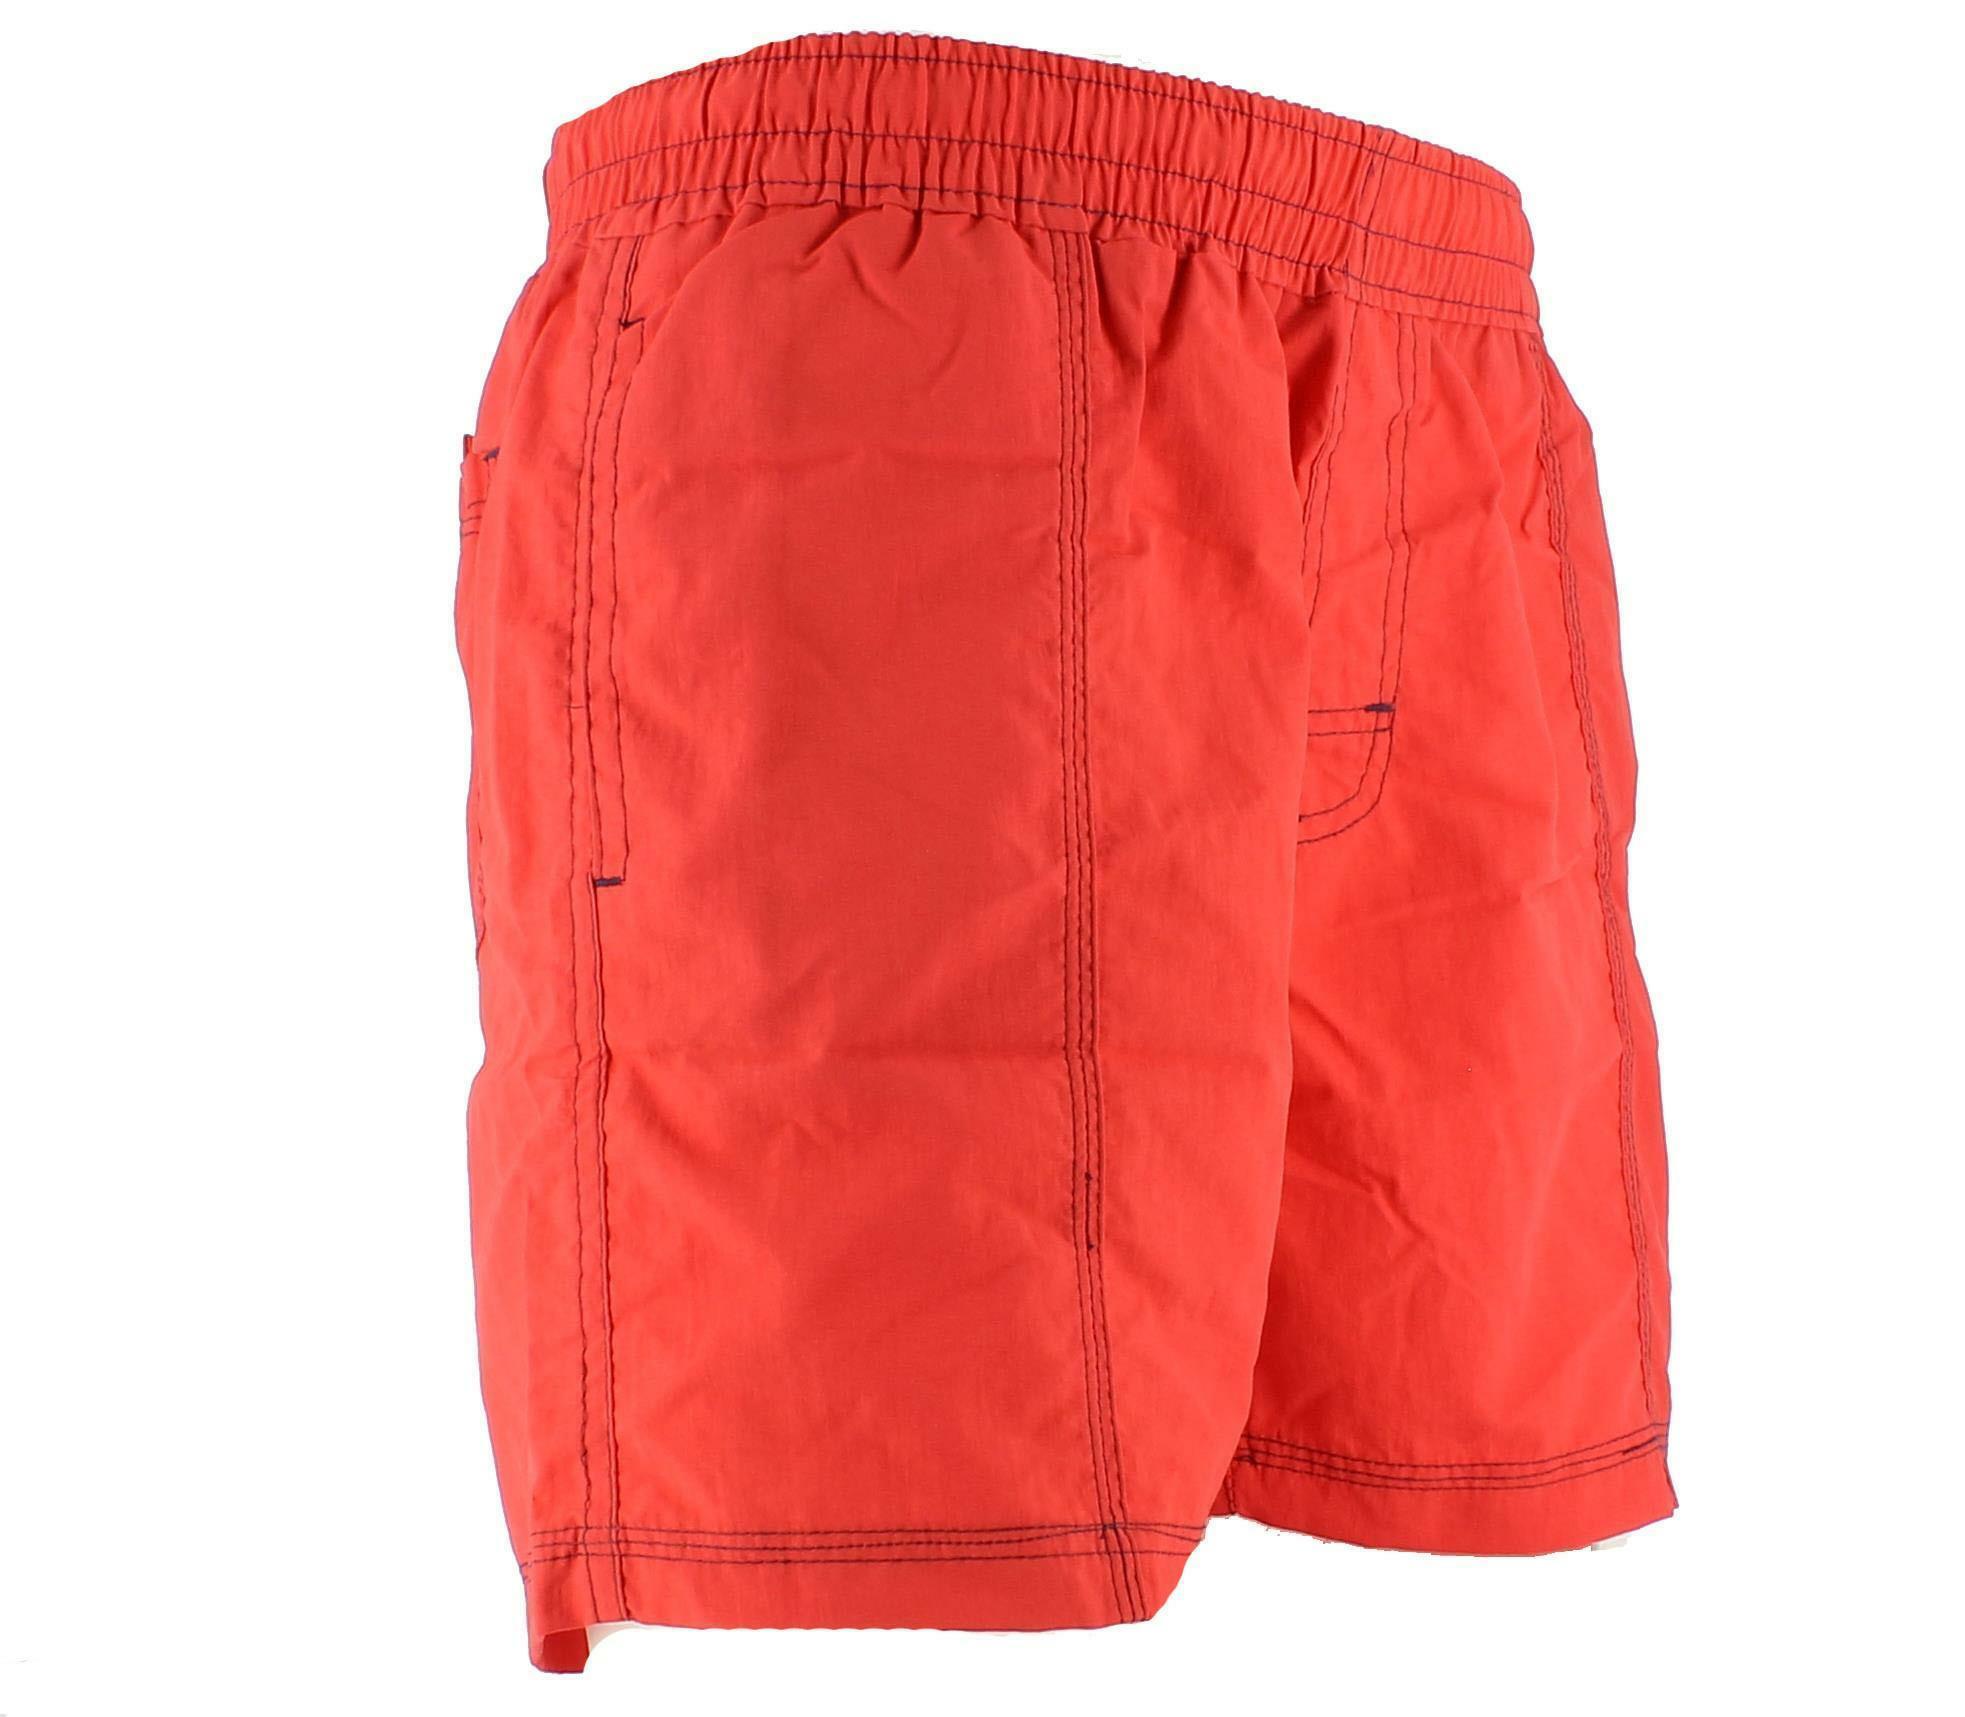 diadora diadora boardshort costume uomo pantaloncino rosso 155365